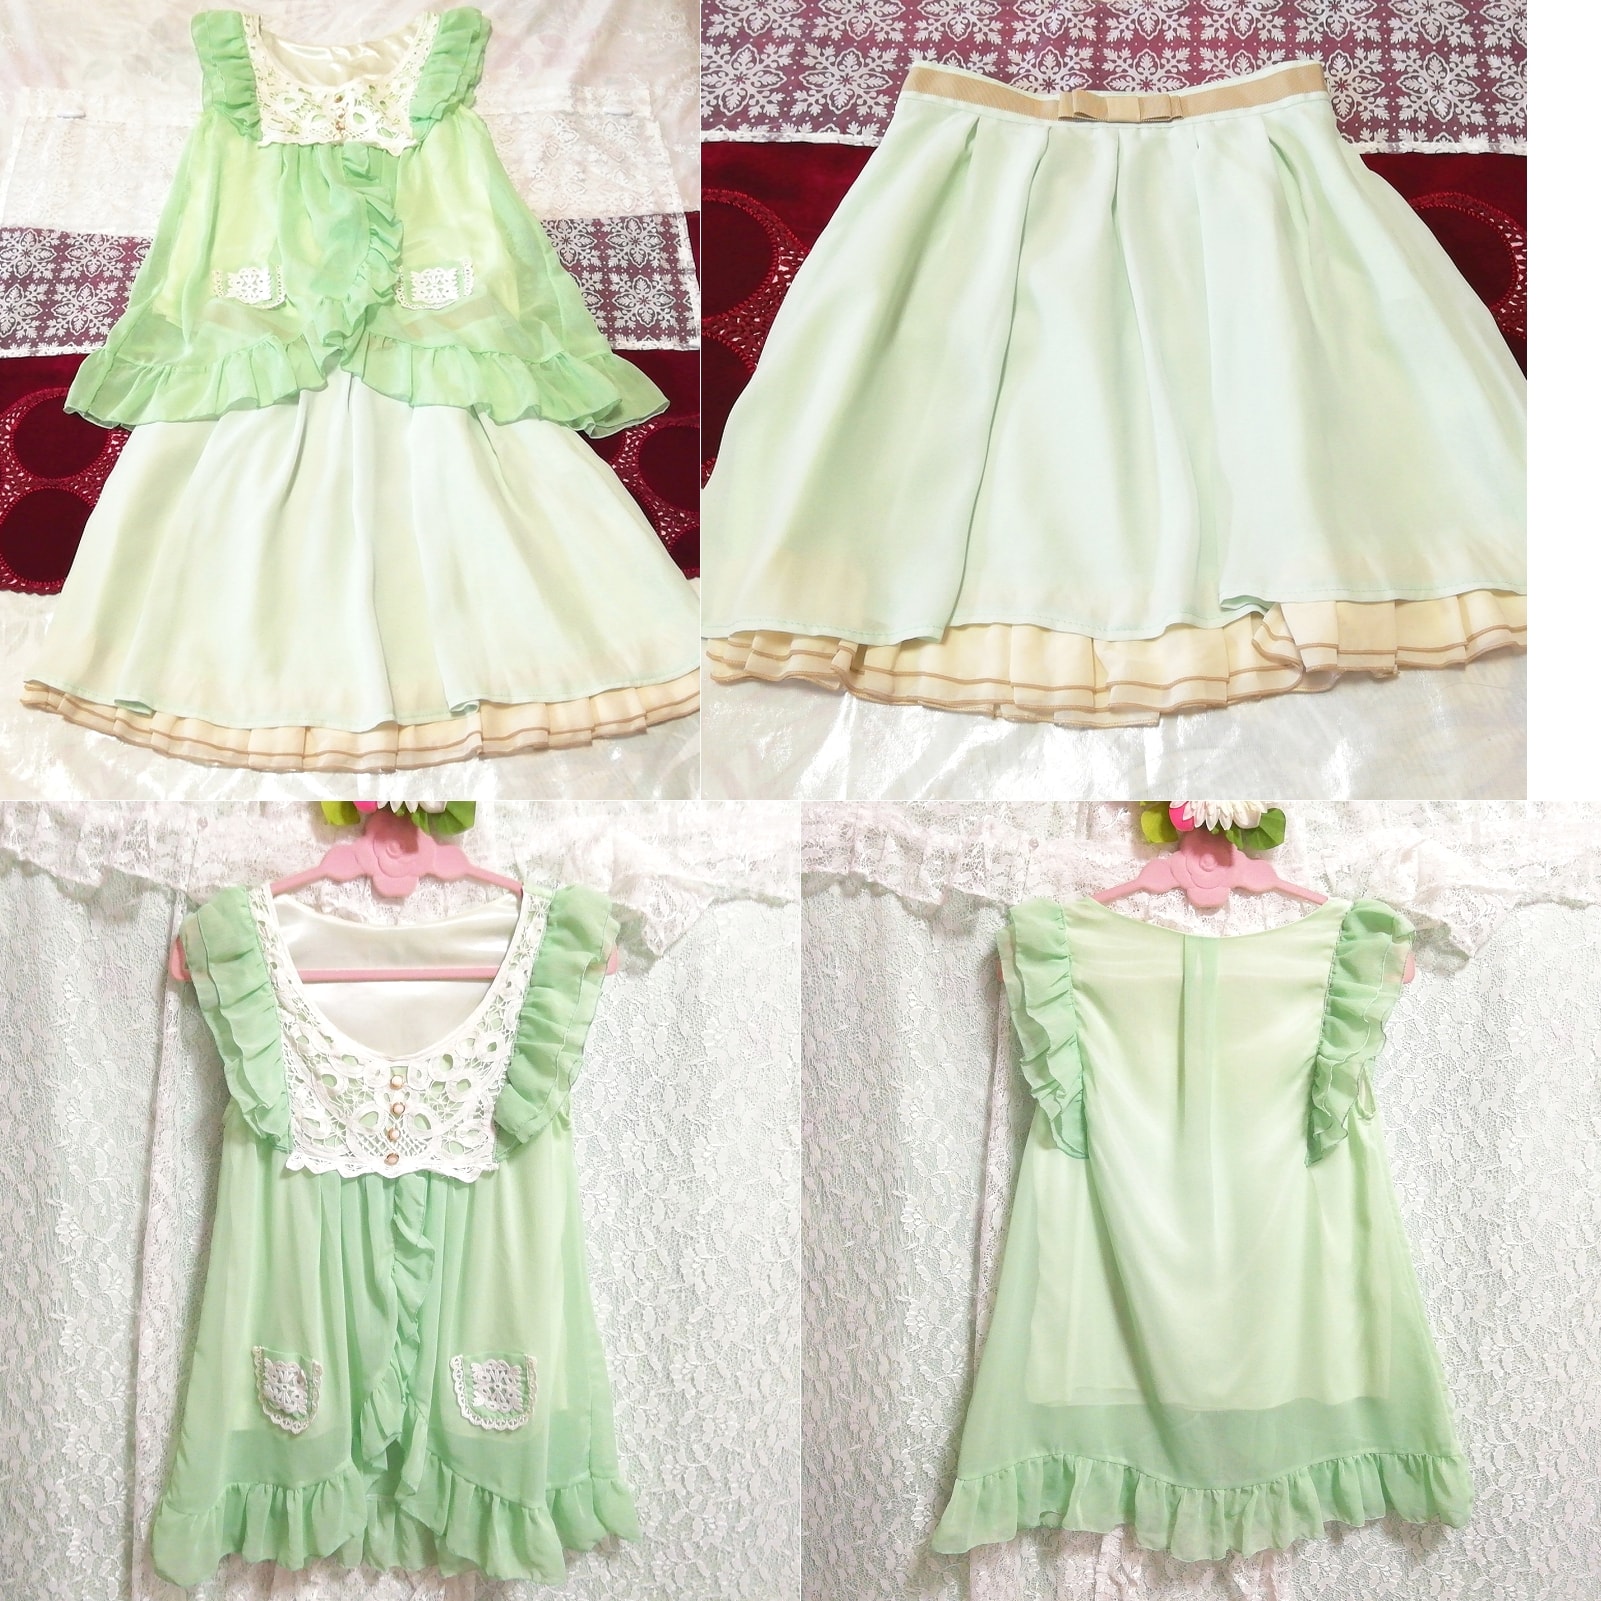 Green chiffon tunic negligee nightgown yellow green chiffon mini skirt dress 2P, fashion, ladies' fashion, nightwear, pajamas